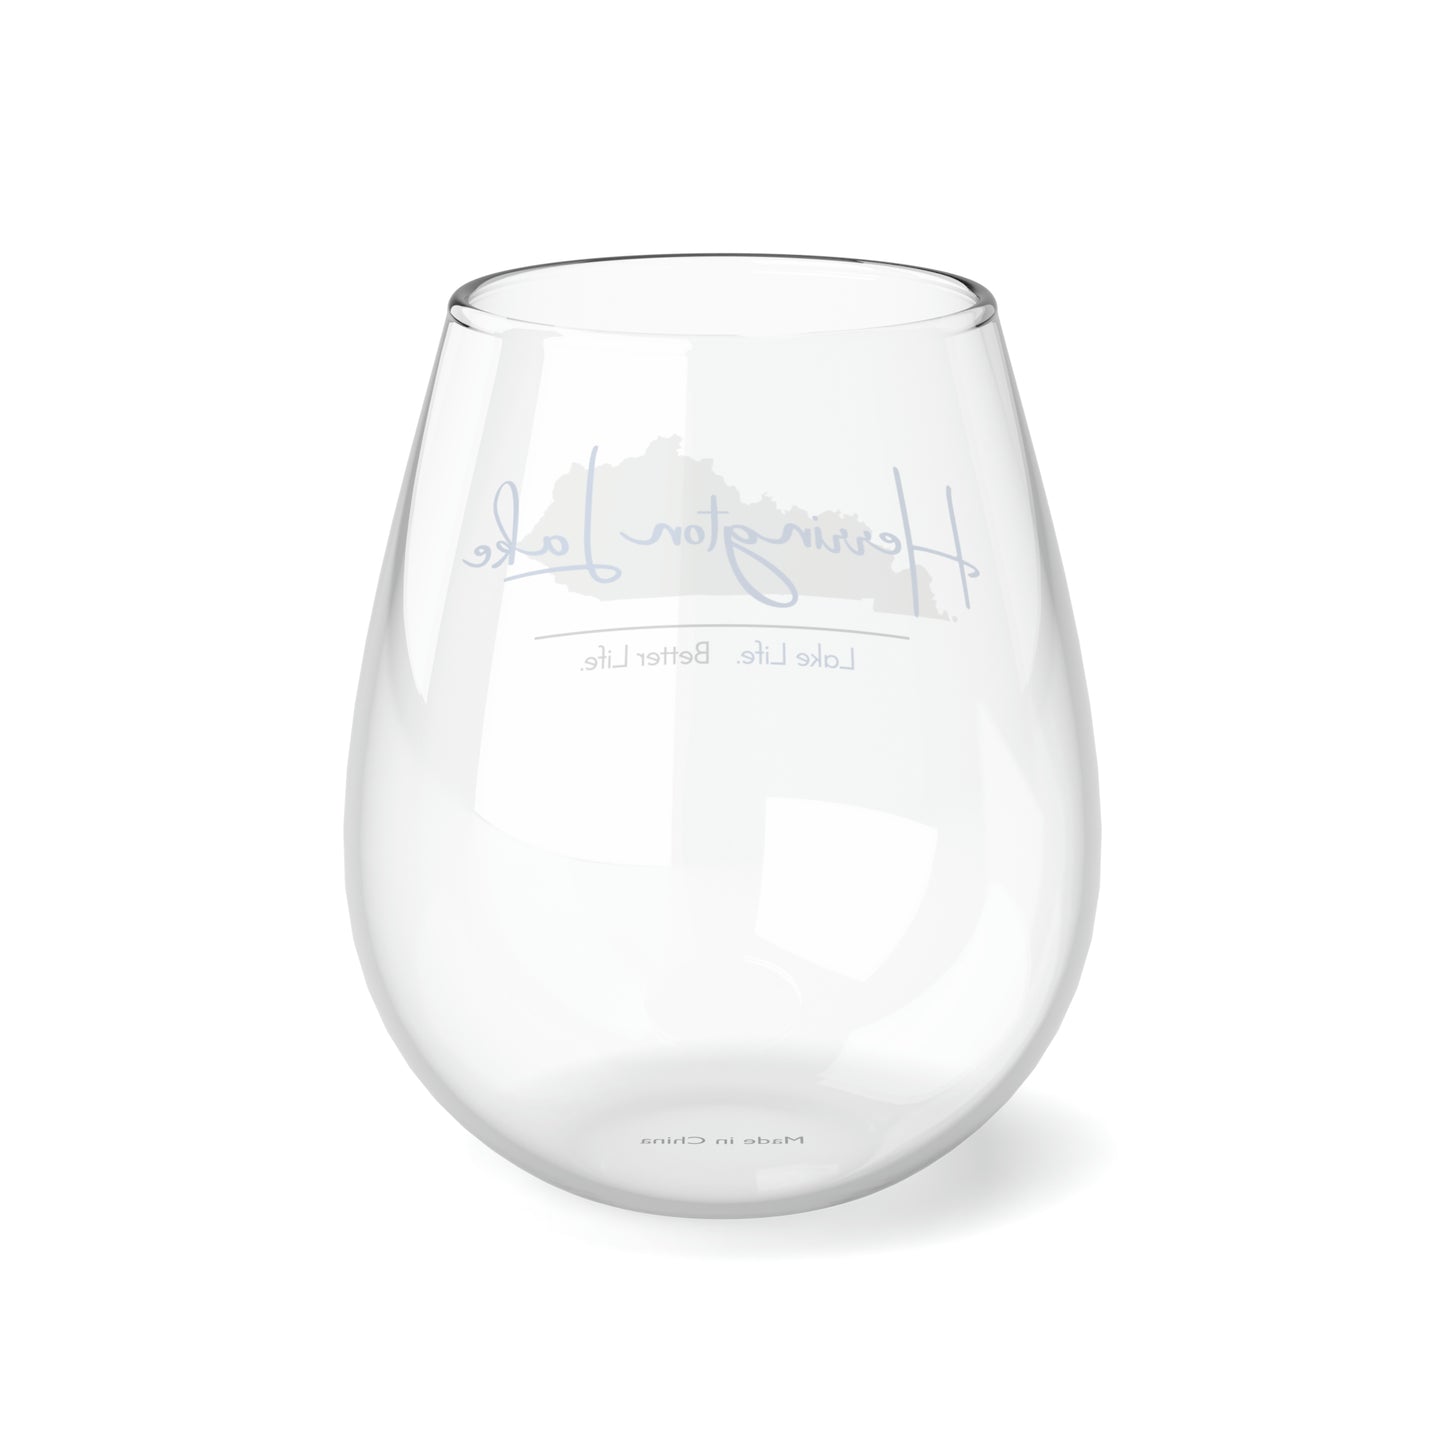 Herrington Lake Signature Stemless Wine Glass, 11.75oz (Blue)